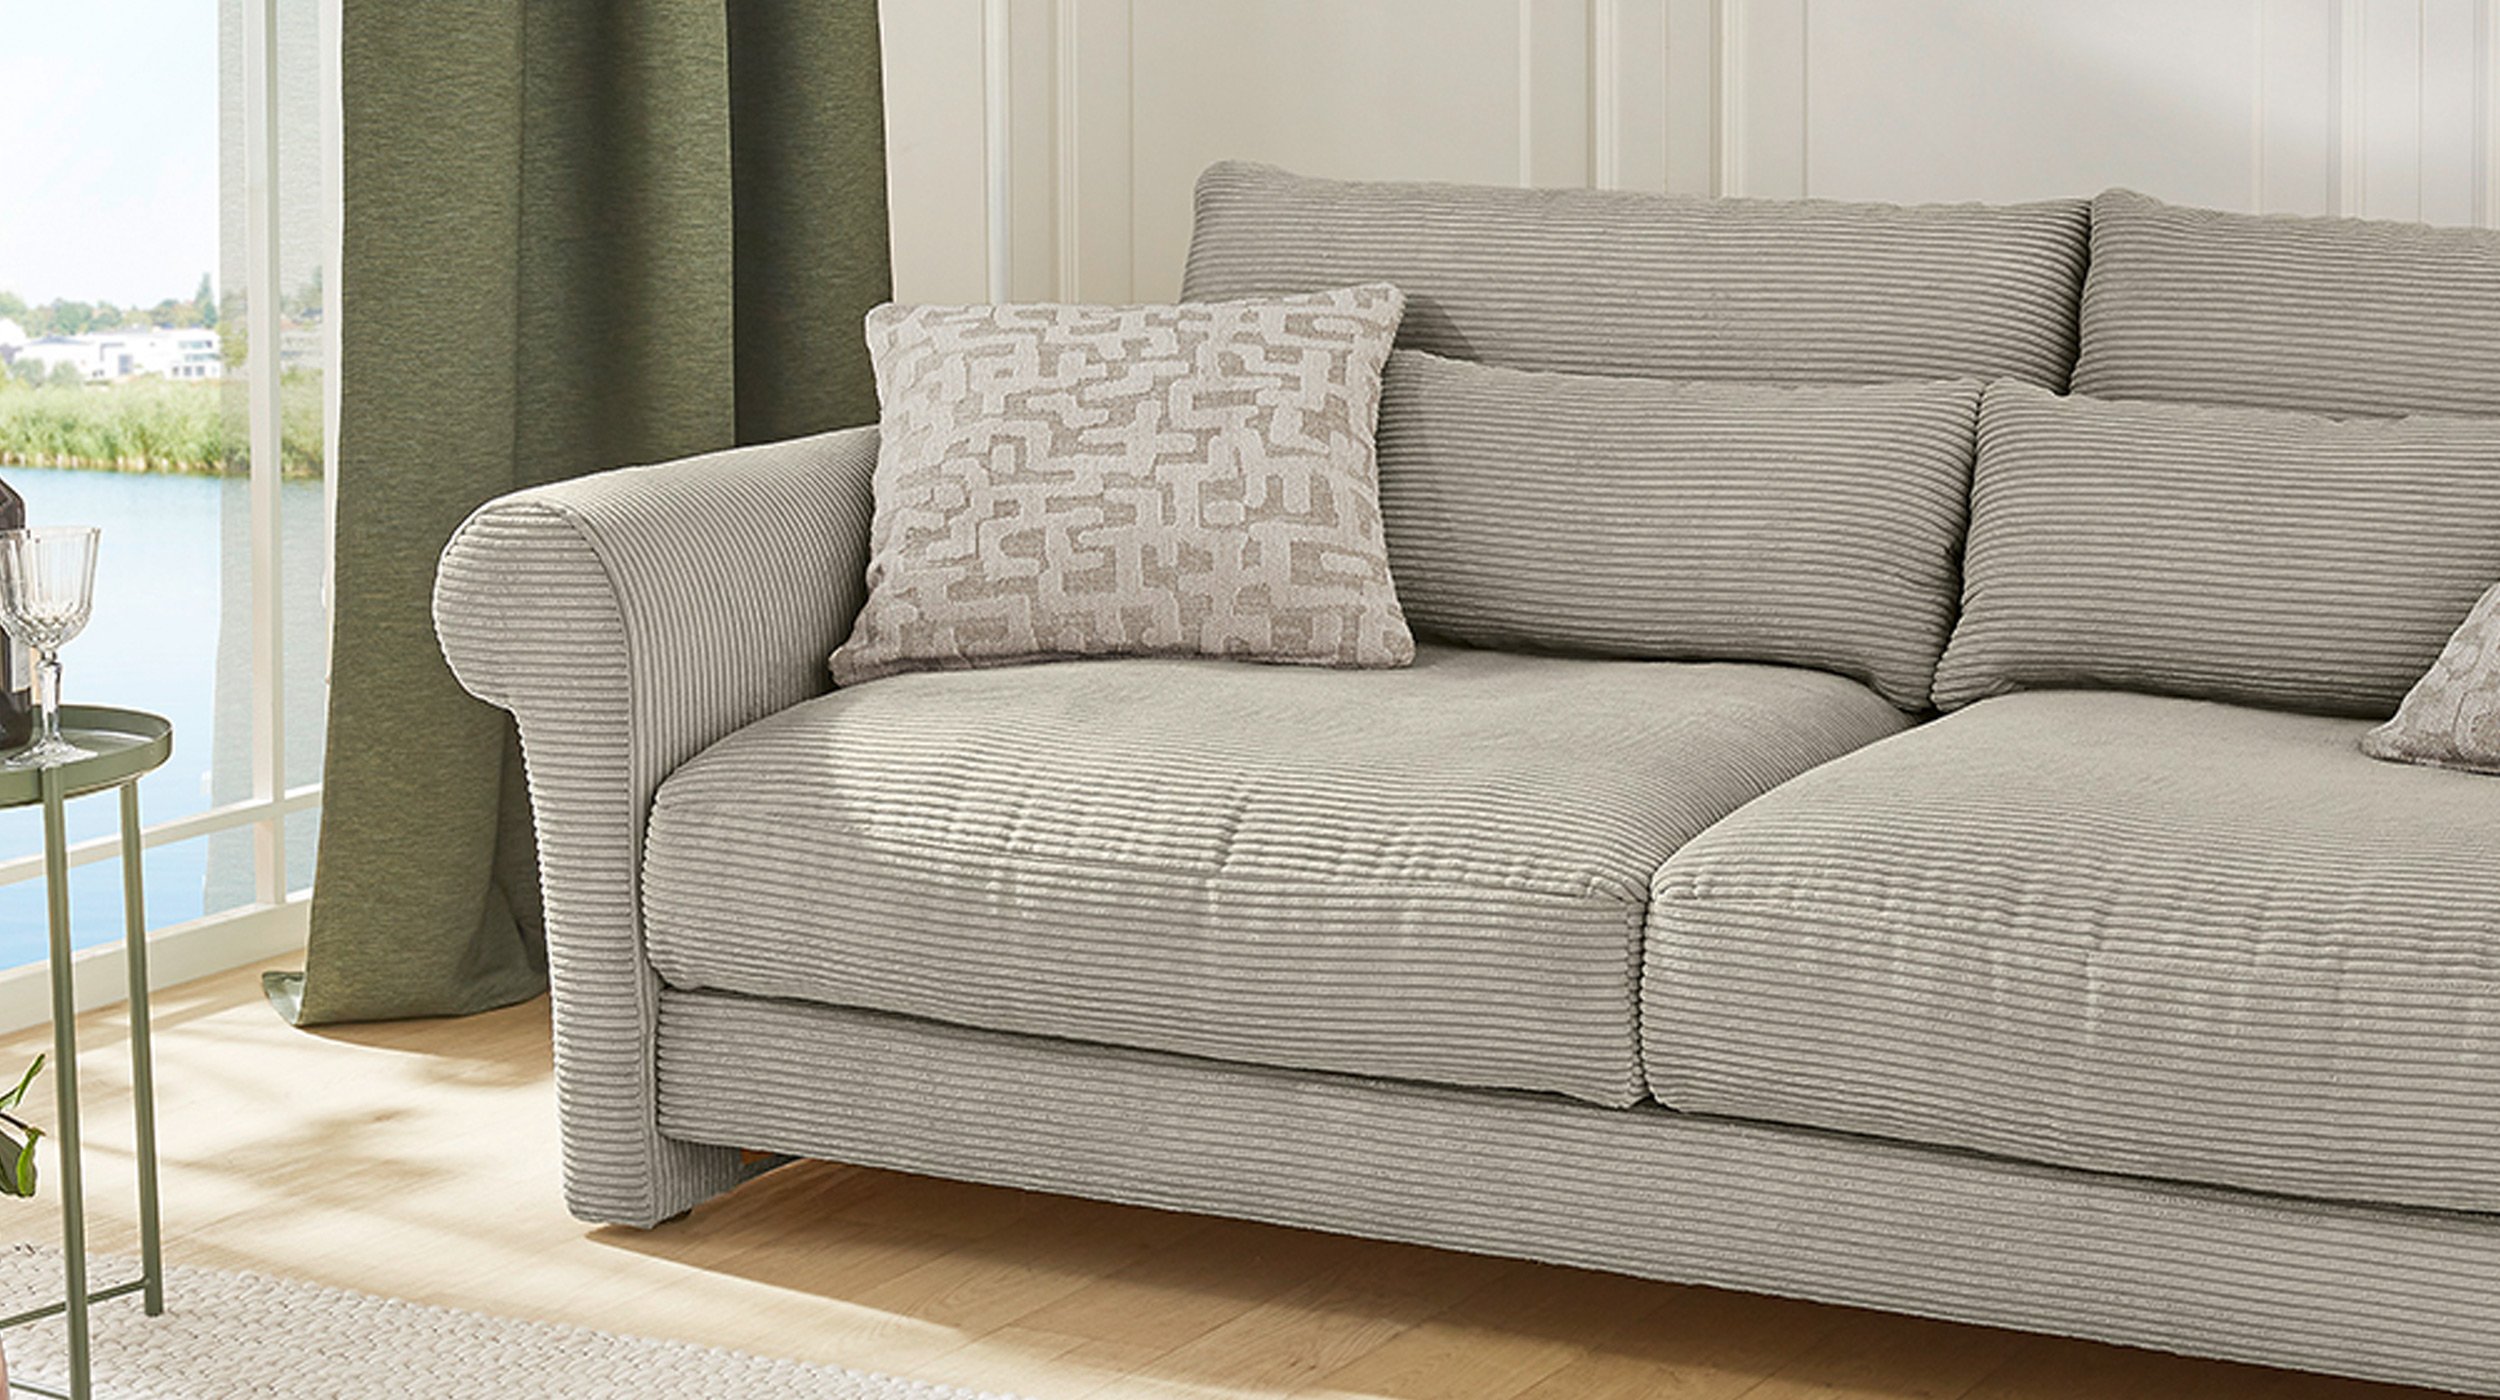 Big Sofa grau Cord mit Bonell-Federkern 247 cm - MAXIMA